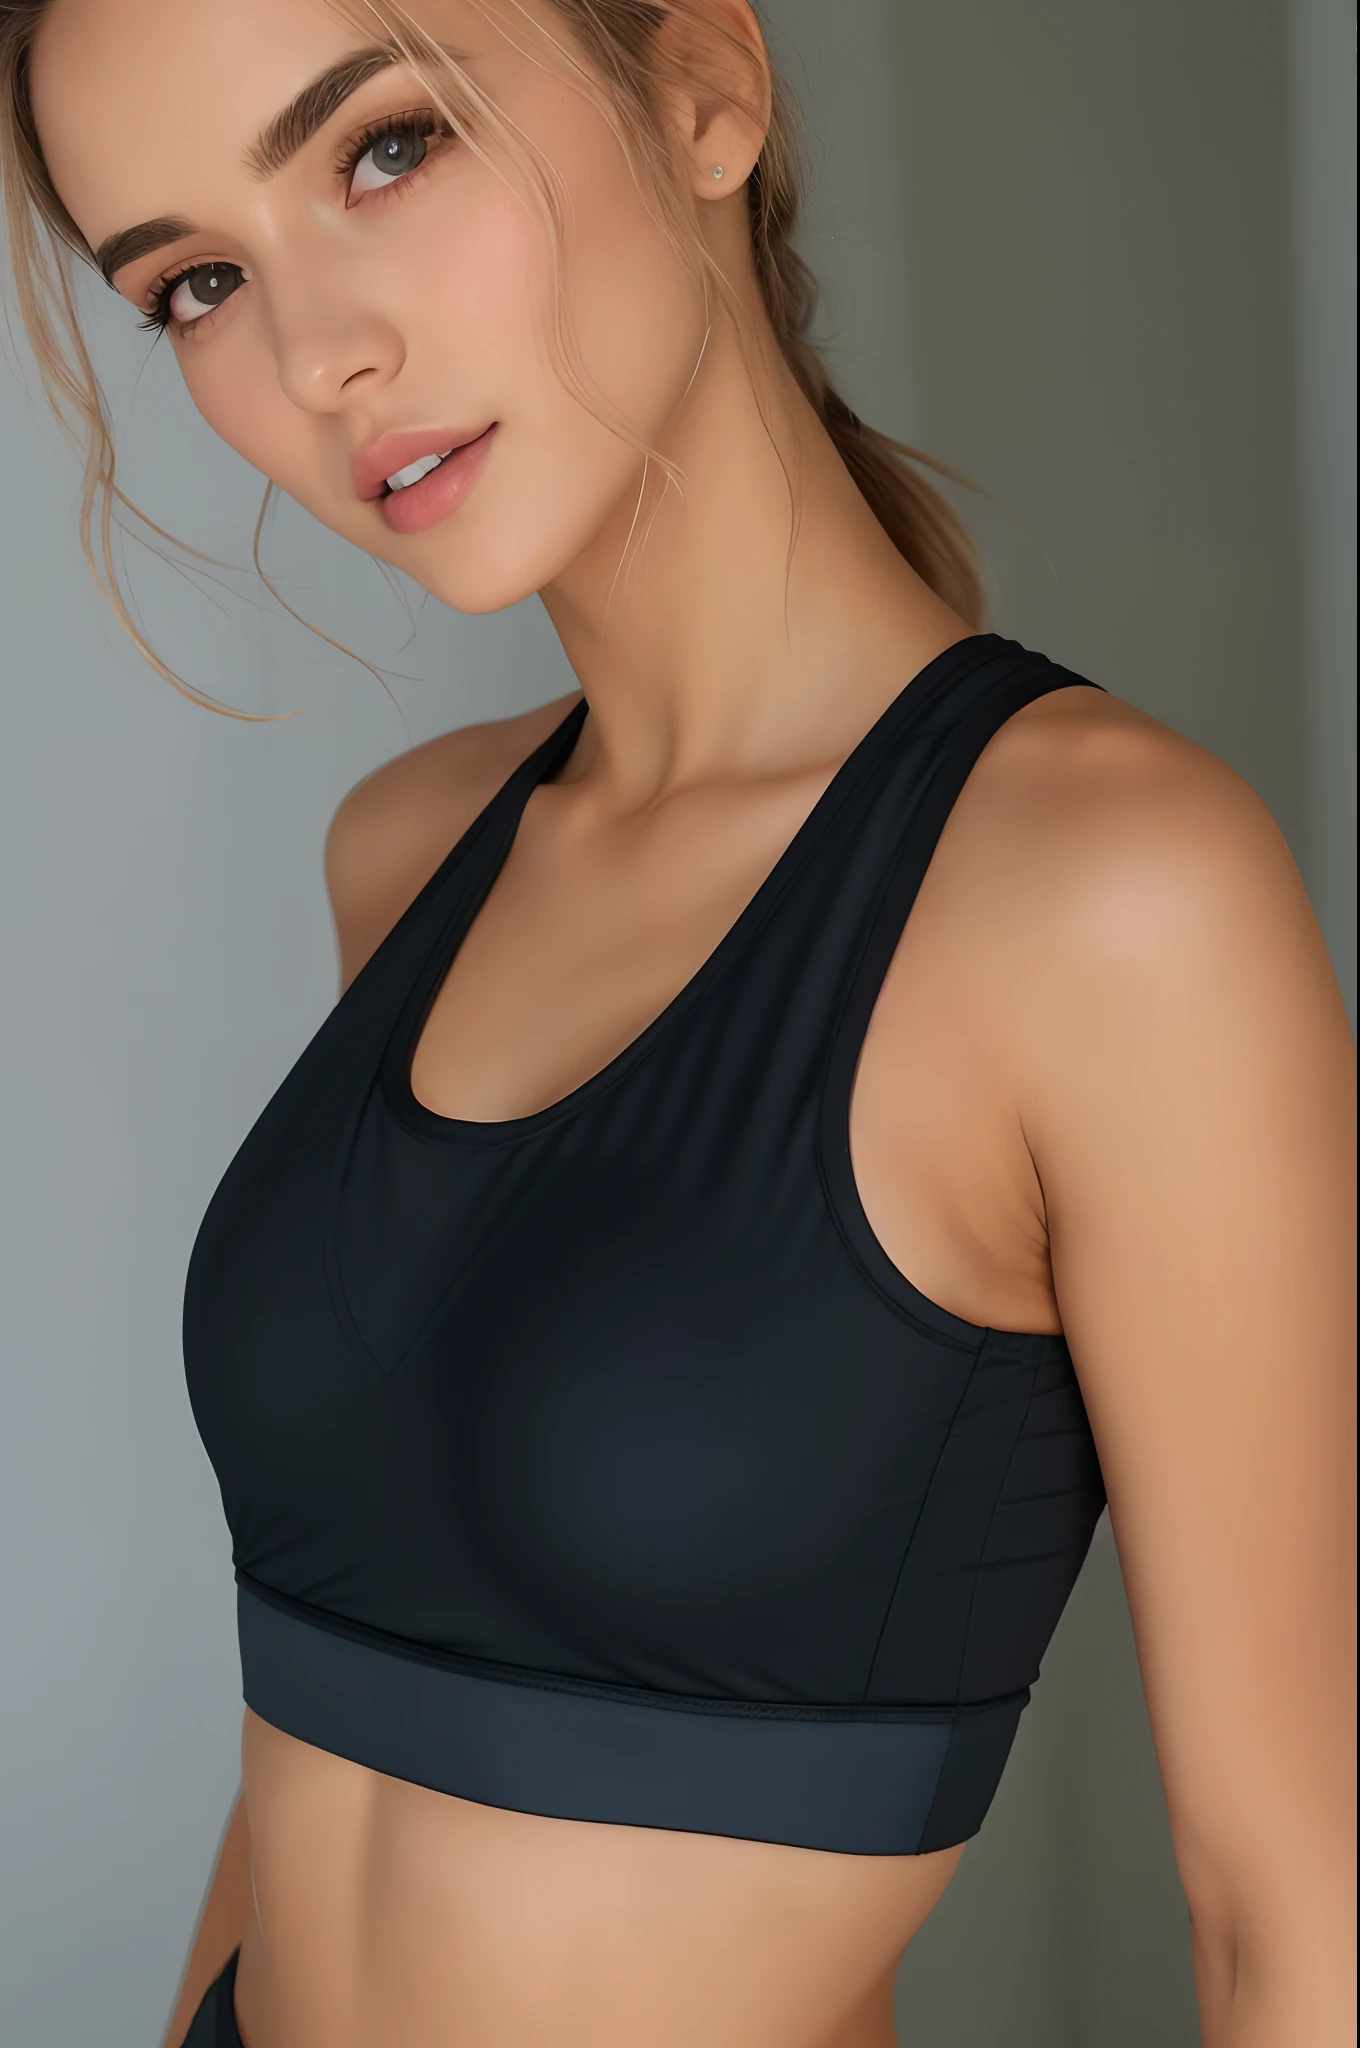 arafed woman in a black sports bra top posing for a picture, detailed sports  bra, Esporte bom, sports bra, brassier - SeaArt AI